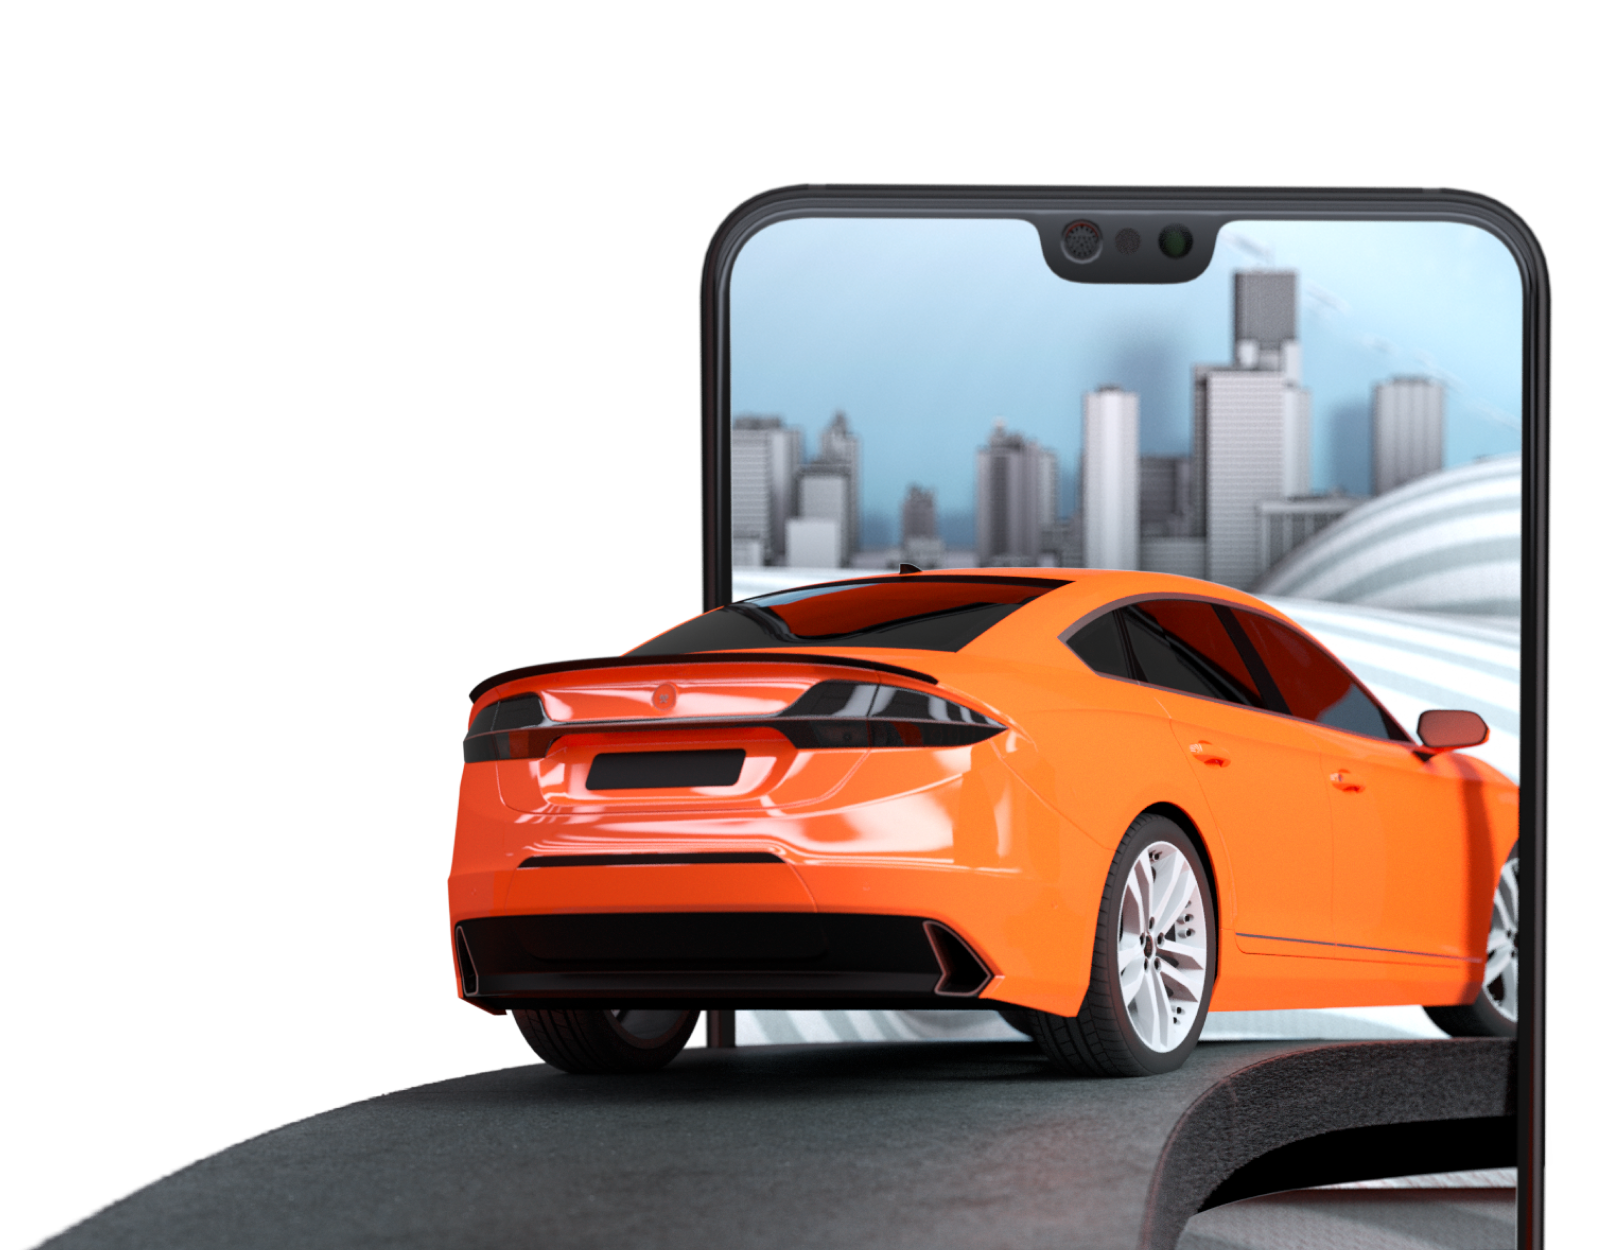 Orange sedan drives into smartphone screen showing a cityscape